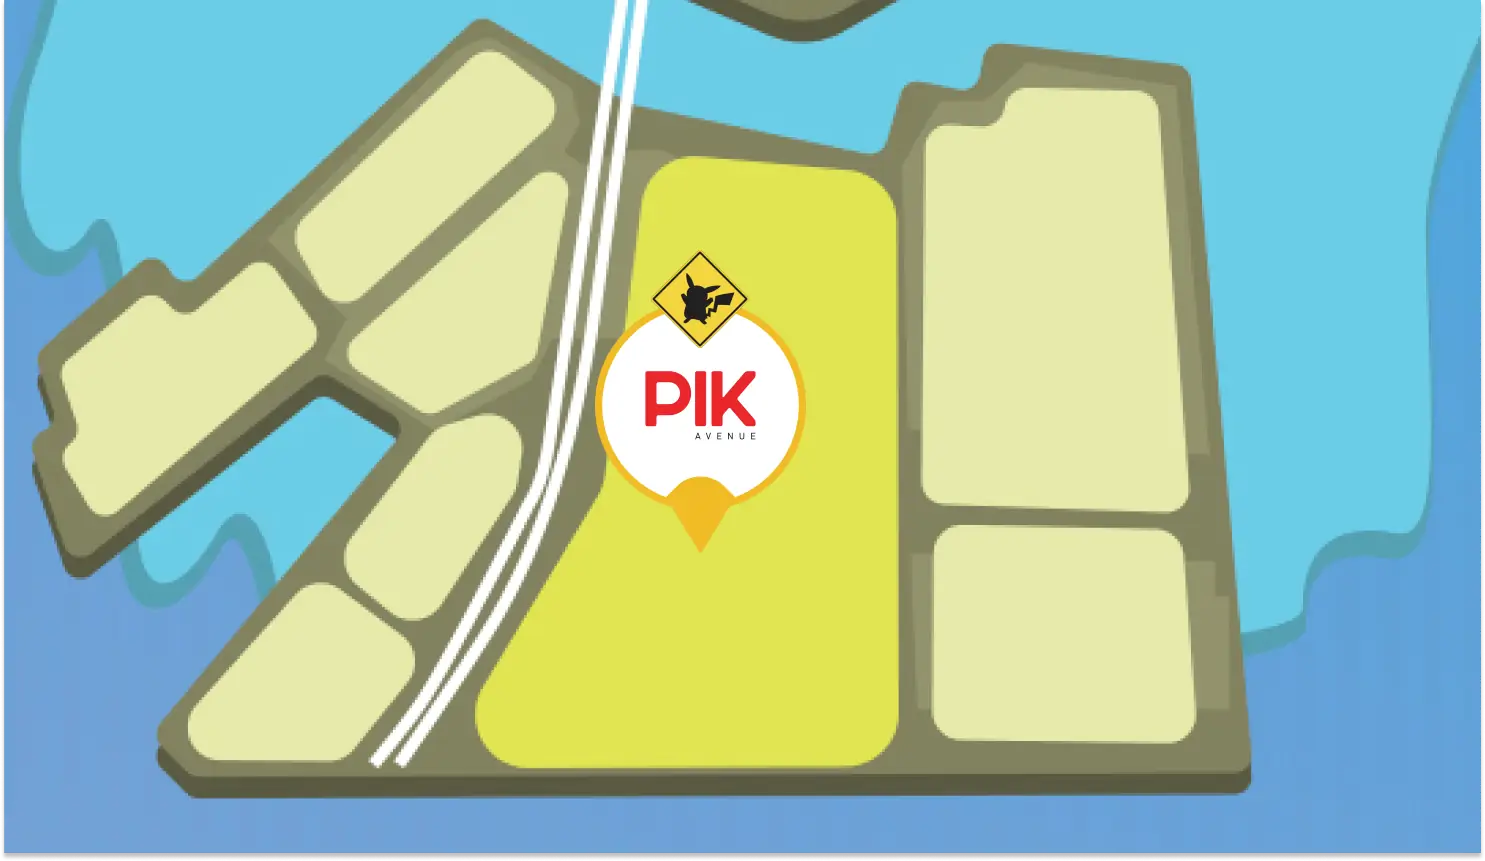 PIK Avenue Map